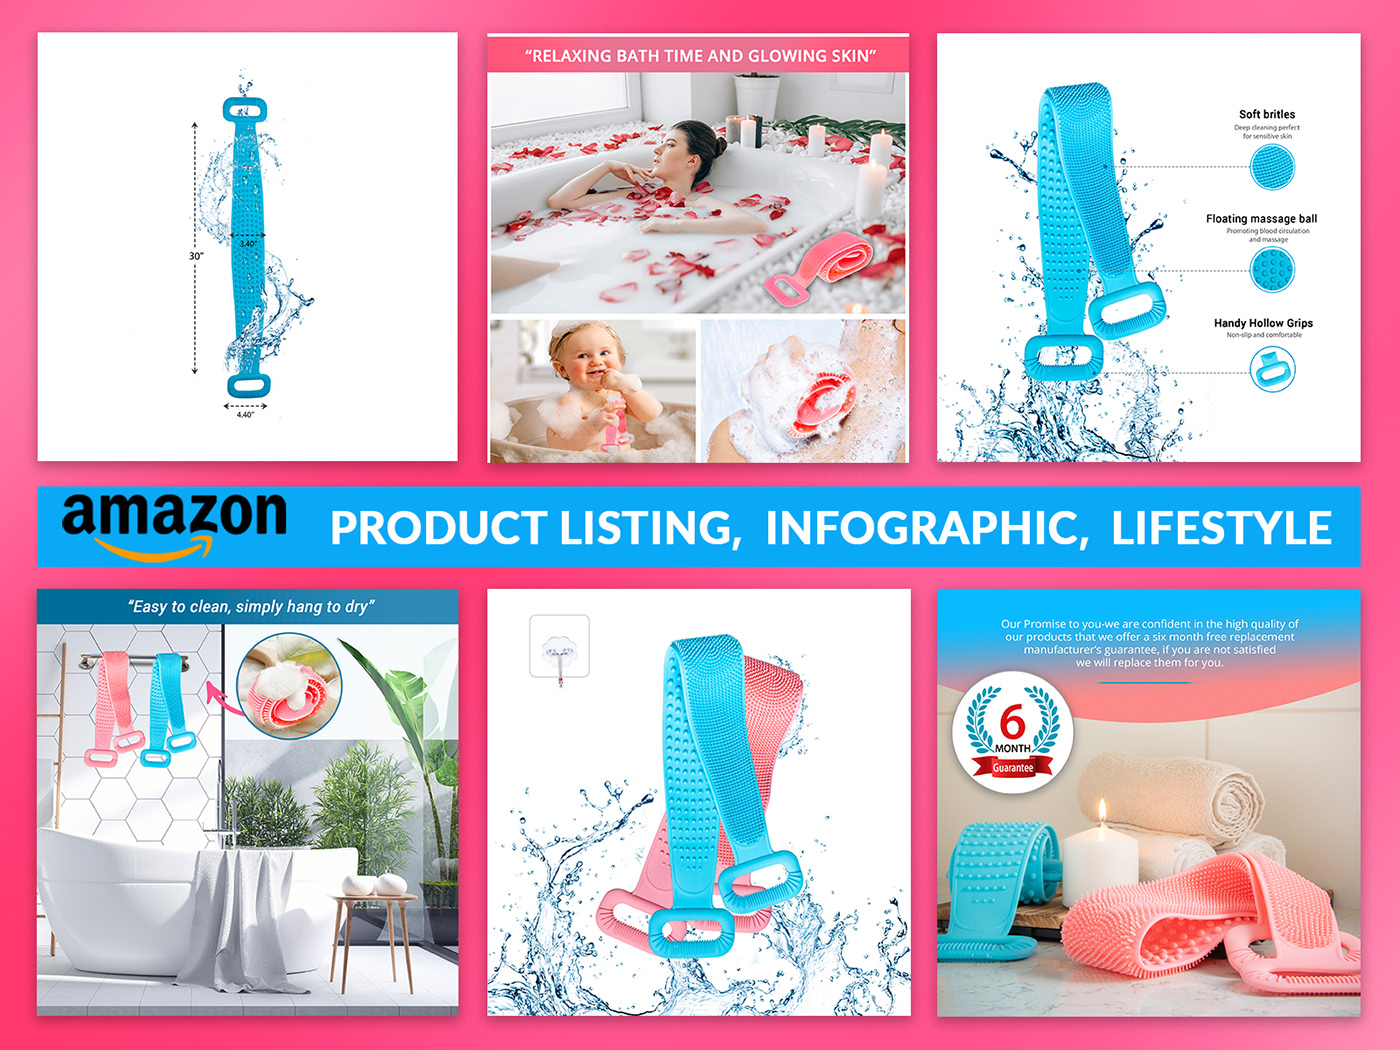 Amazon amazon ebc services Amazon Listing Amazon Product Amazon Seller AmazonA+content infographic image lifestyle images product listing services Product Retouch